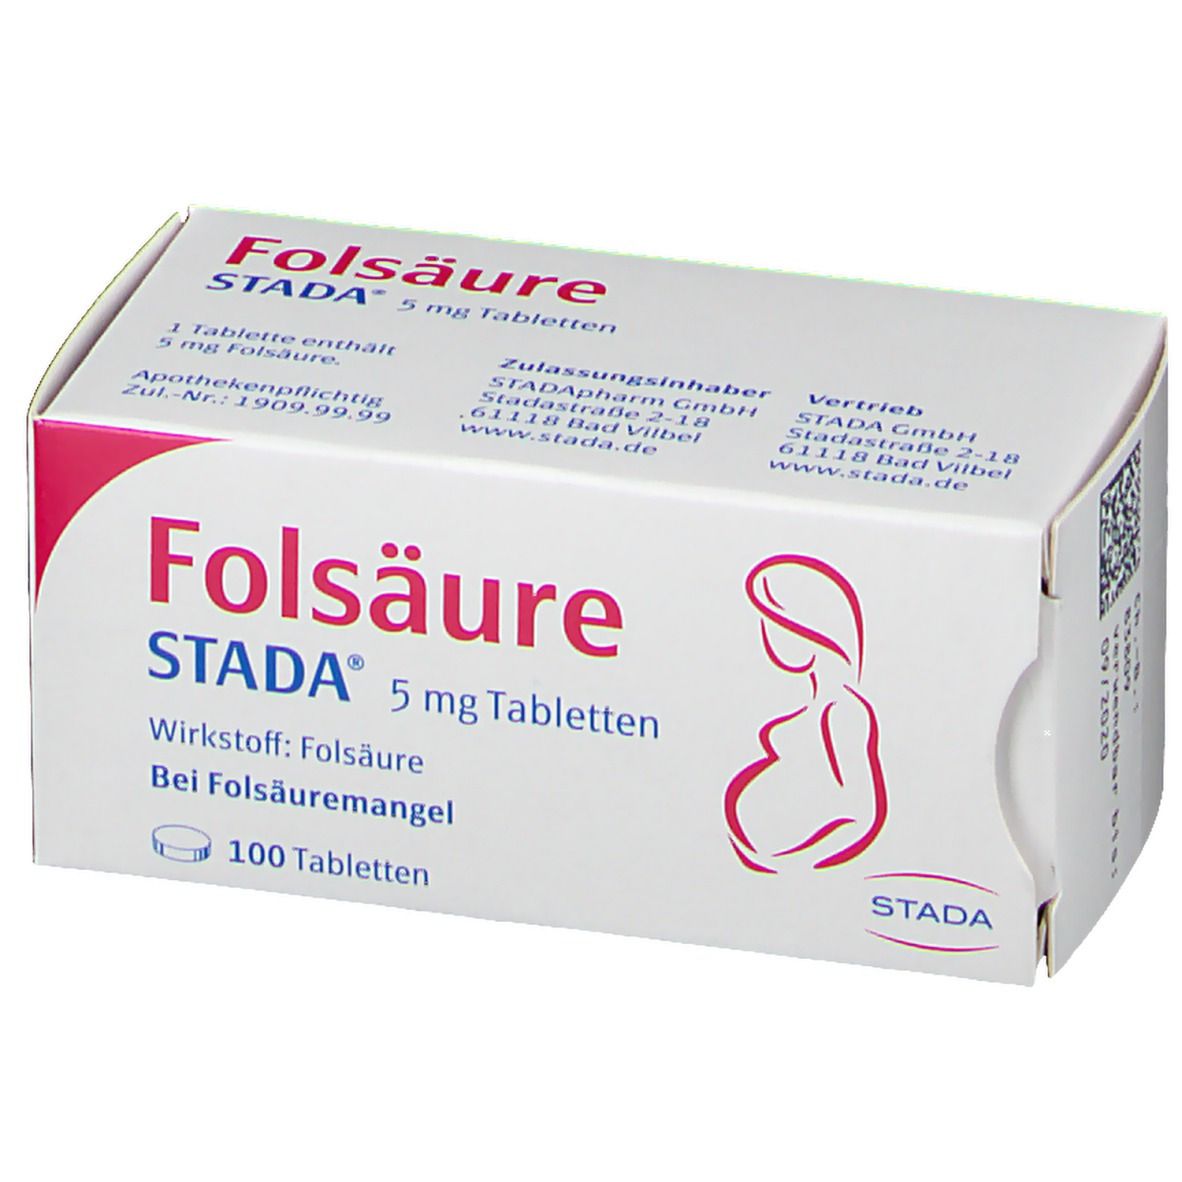 Folsäure STADA® 5 mg Tabletten 100 St - shop-apotheke.com